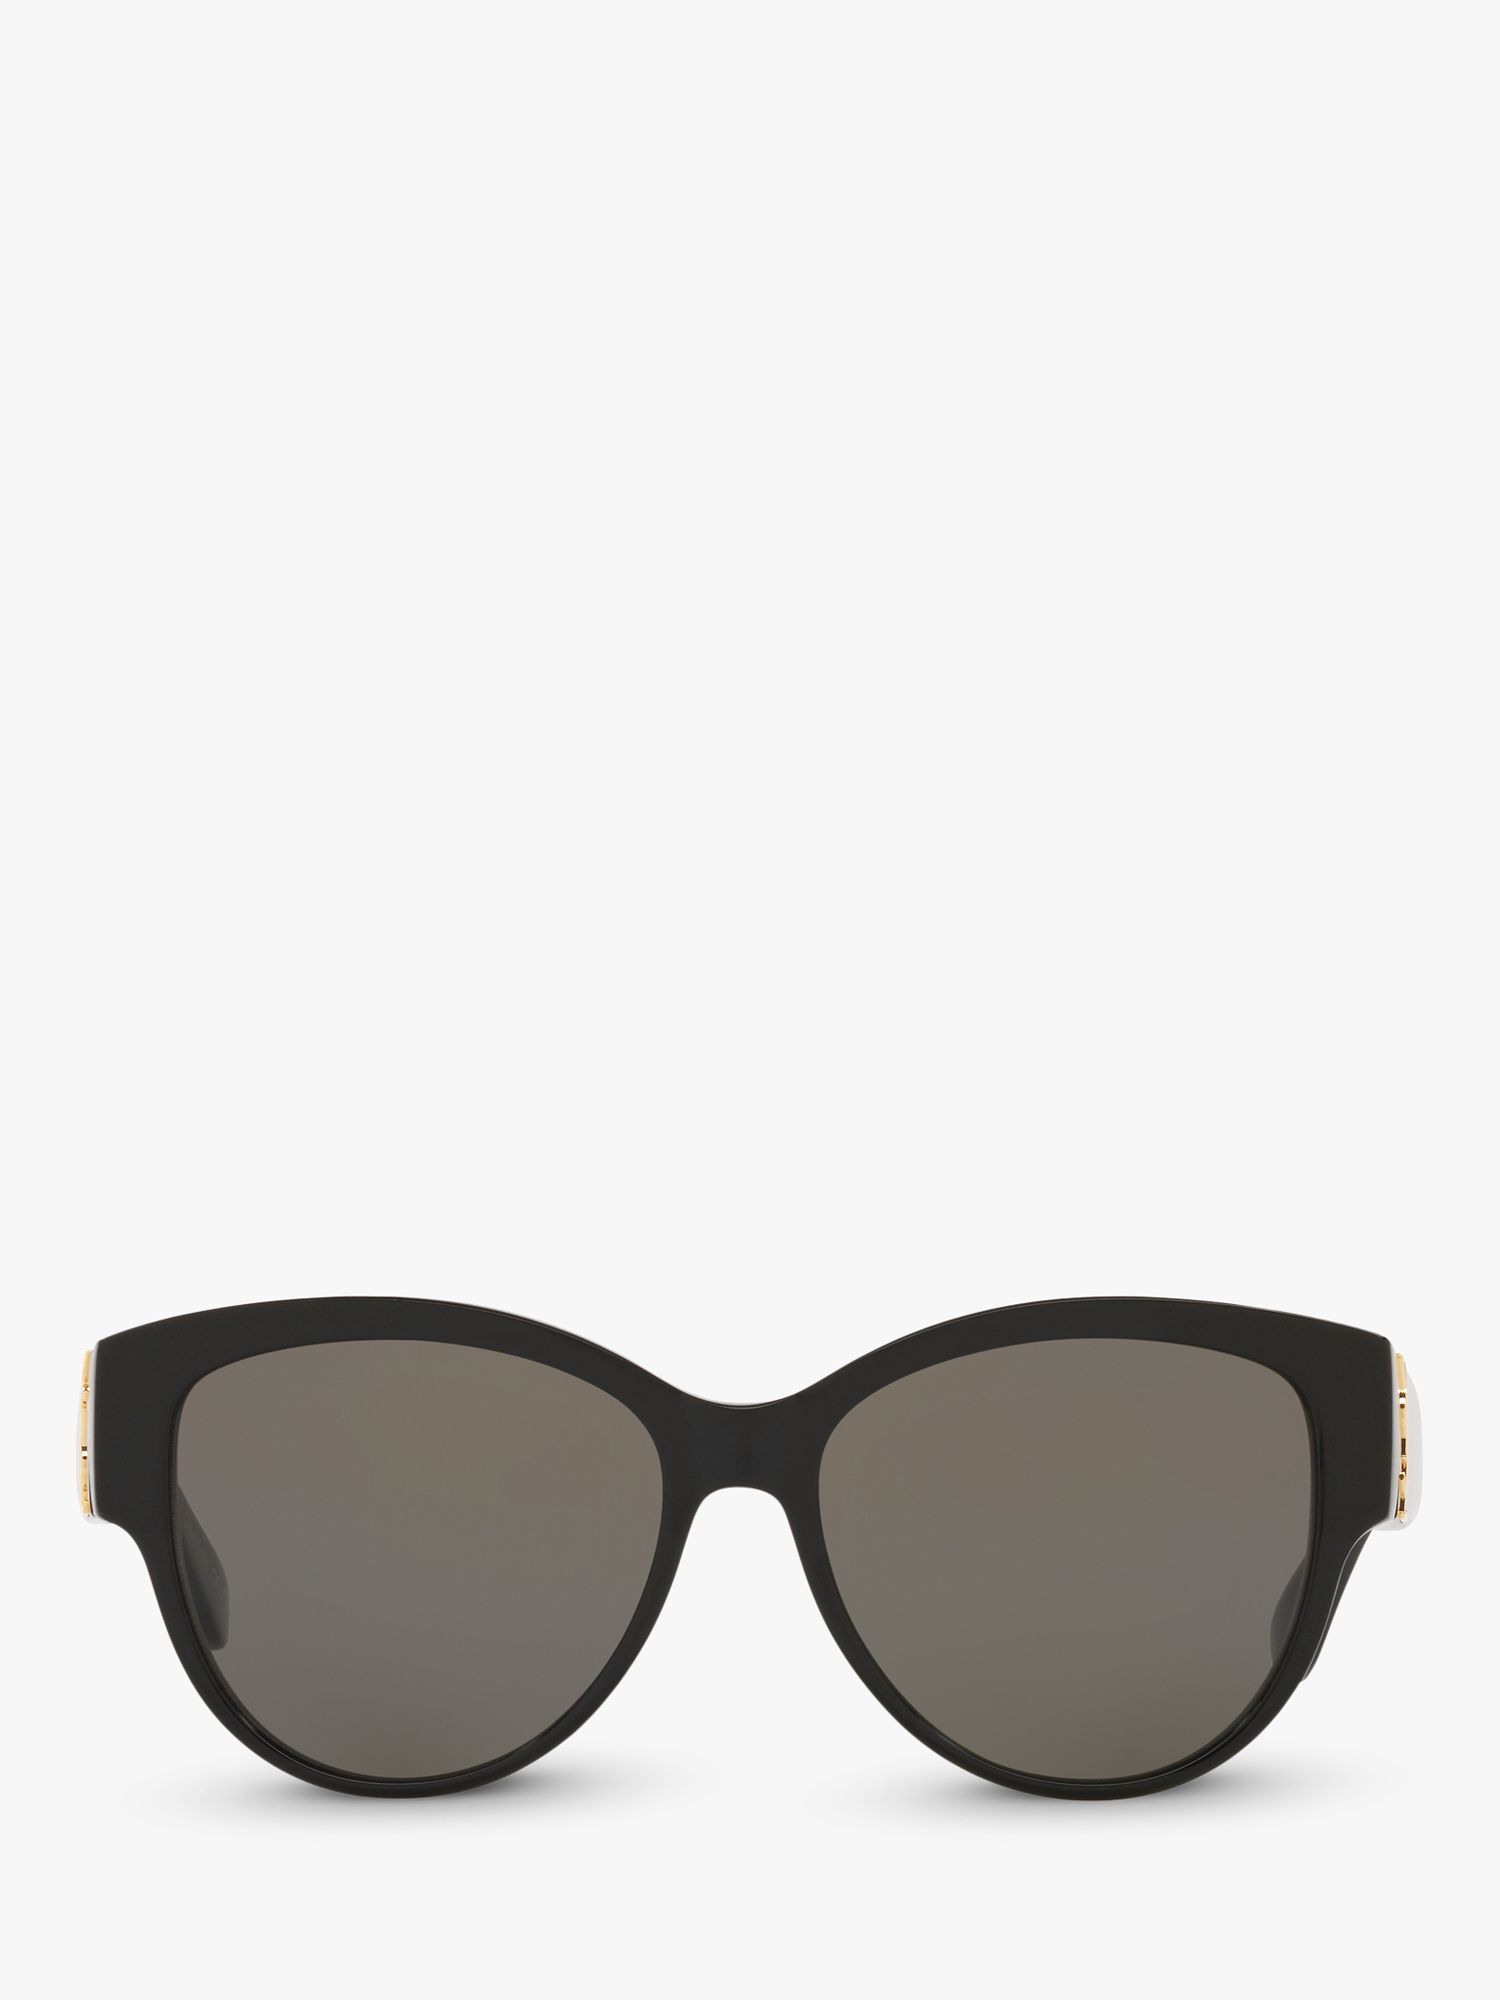 Yves Saint Laurent SL M3 55 Women's Oval Sunglasses, Black/Grey at John ...